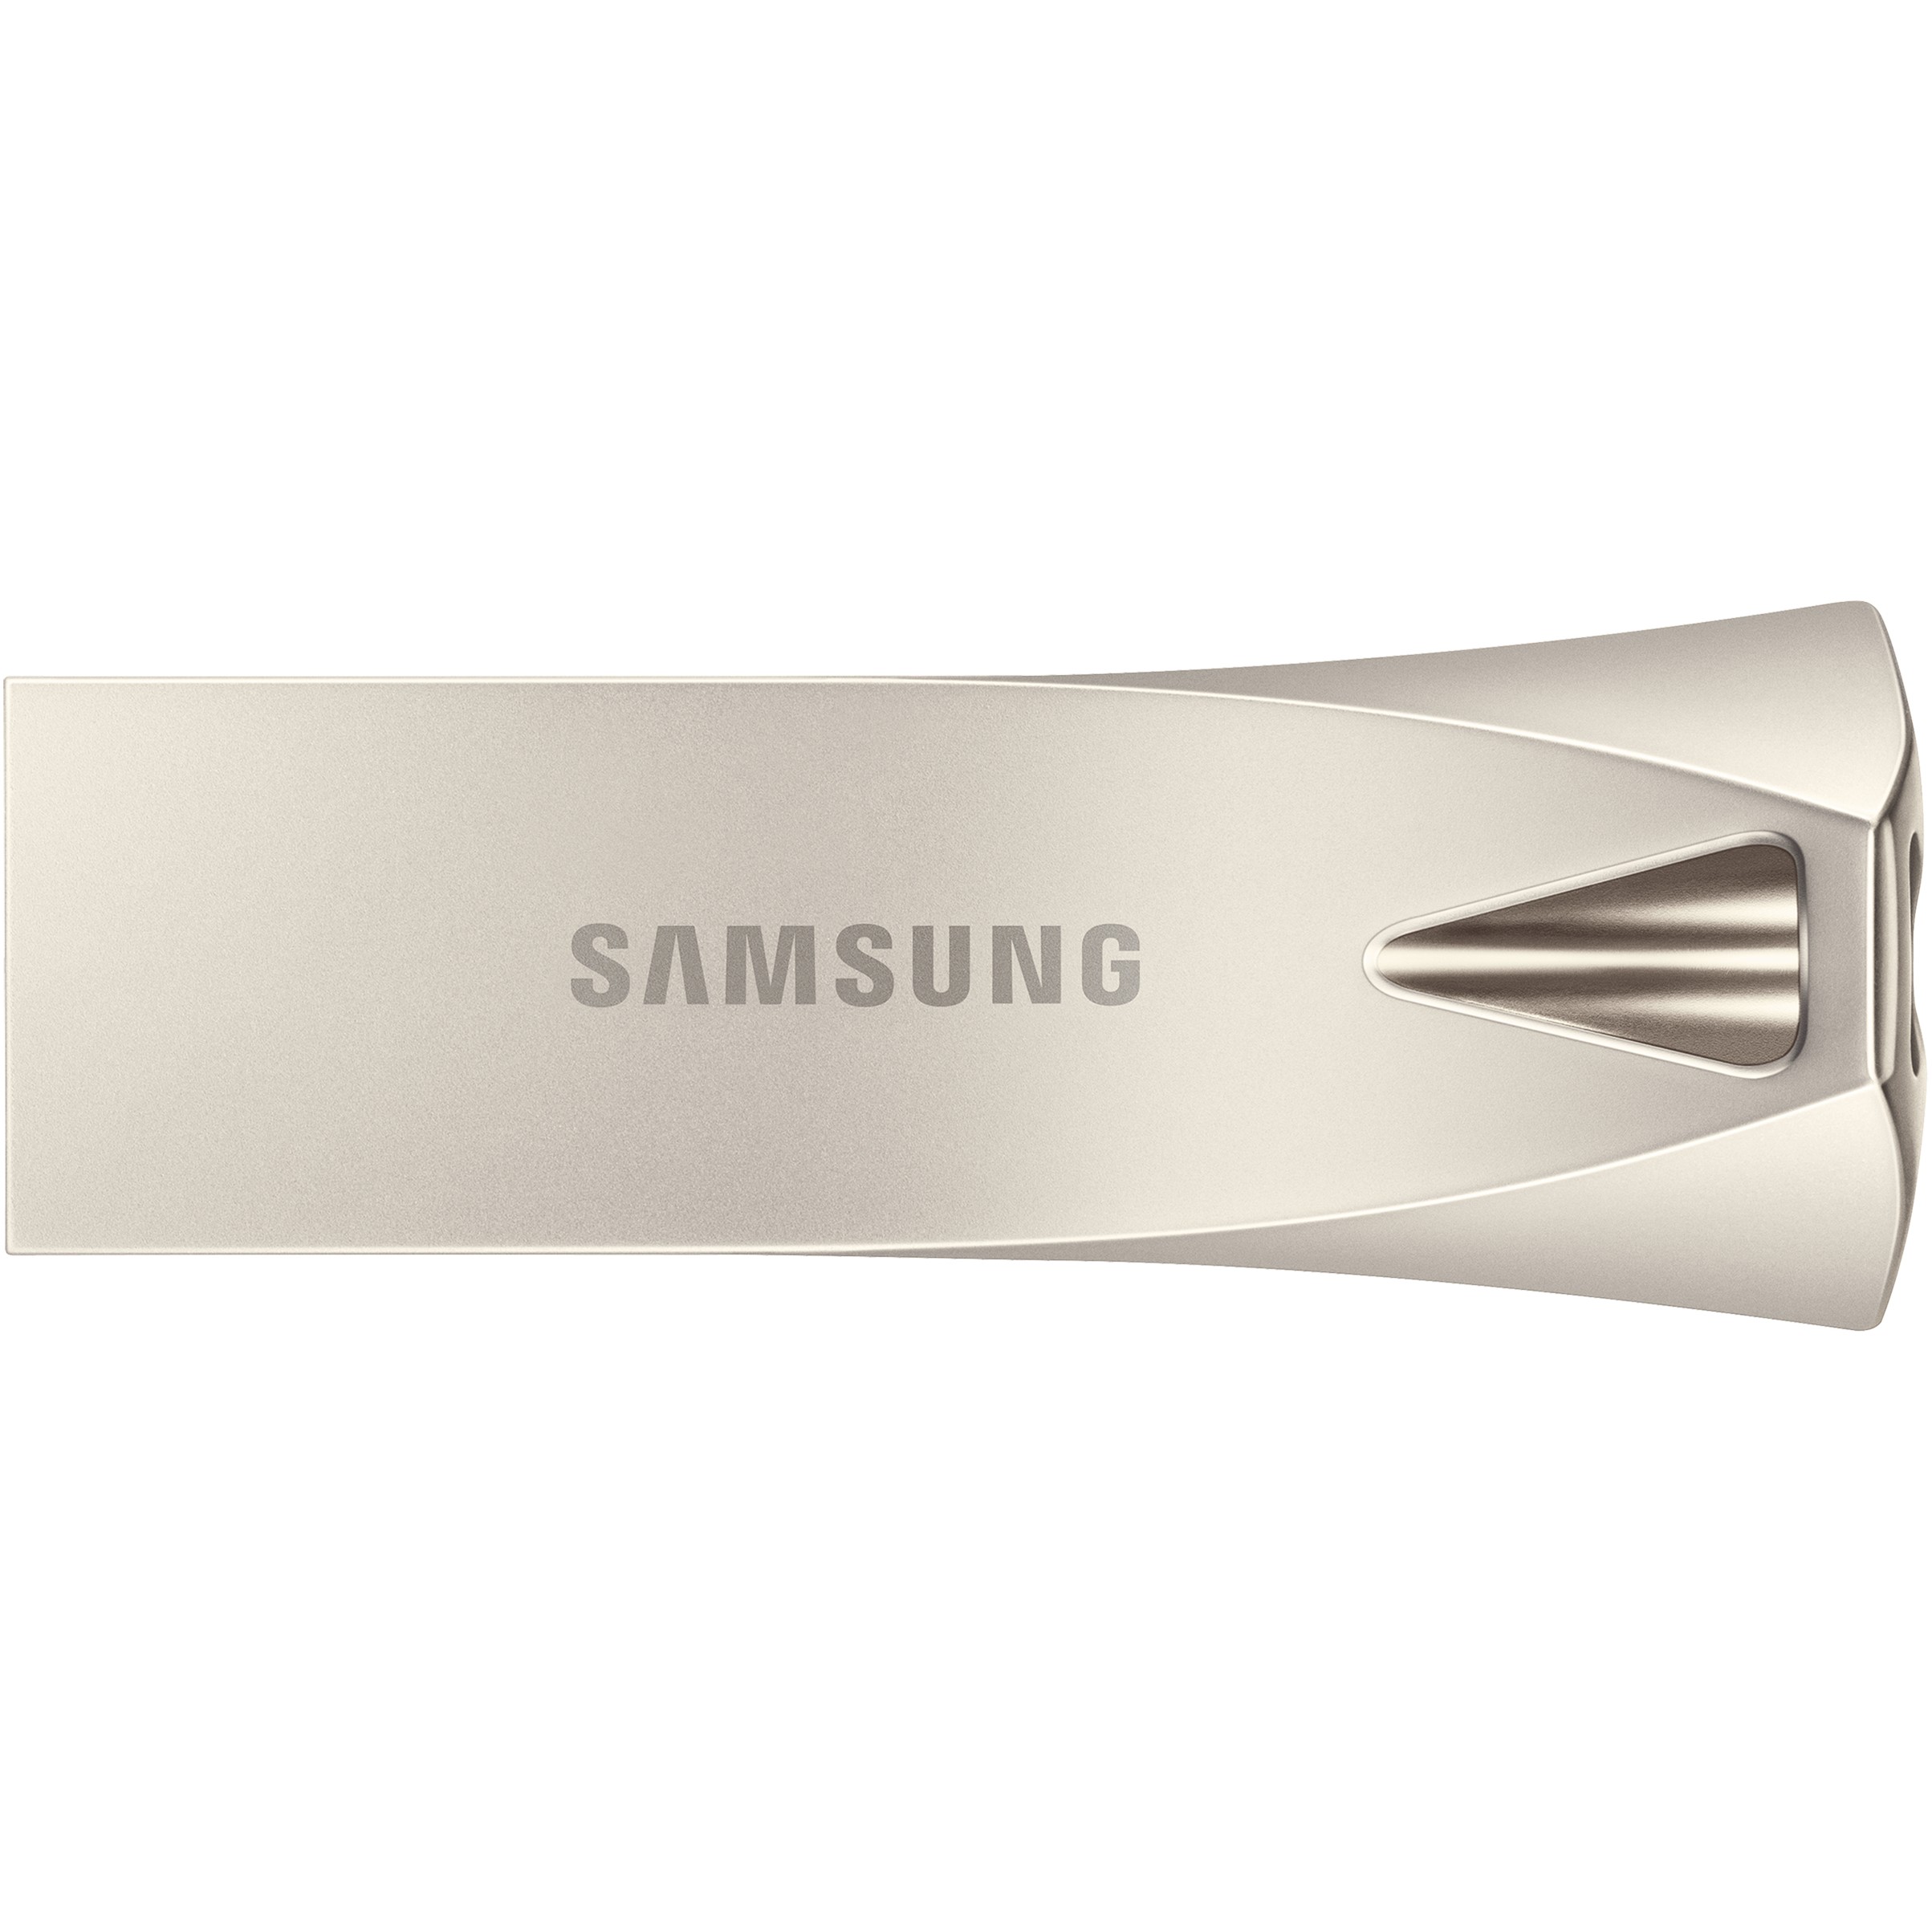 Samsung MUF-128BE USB flash drive